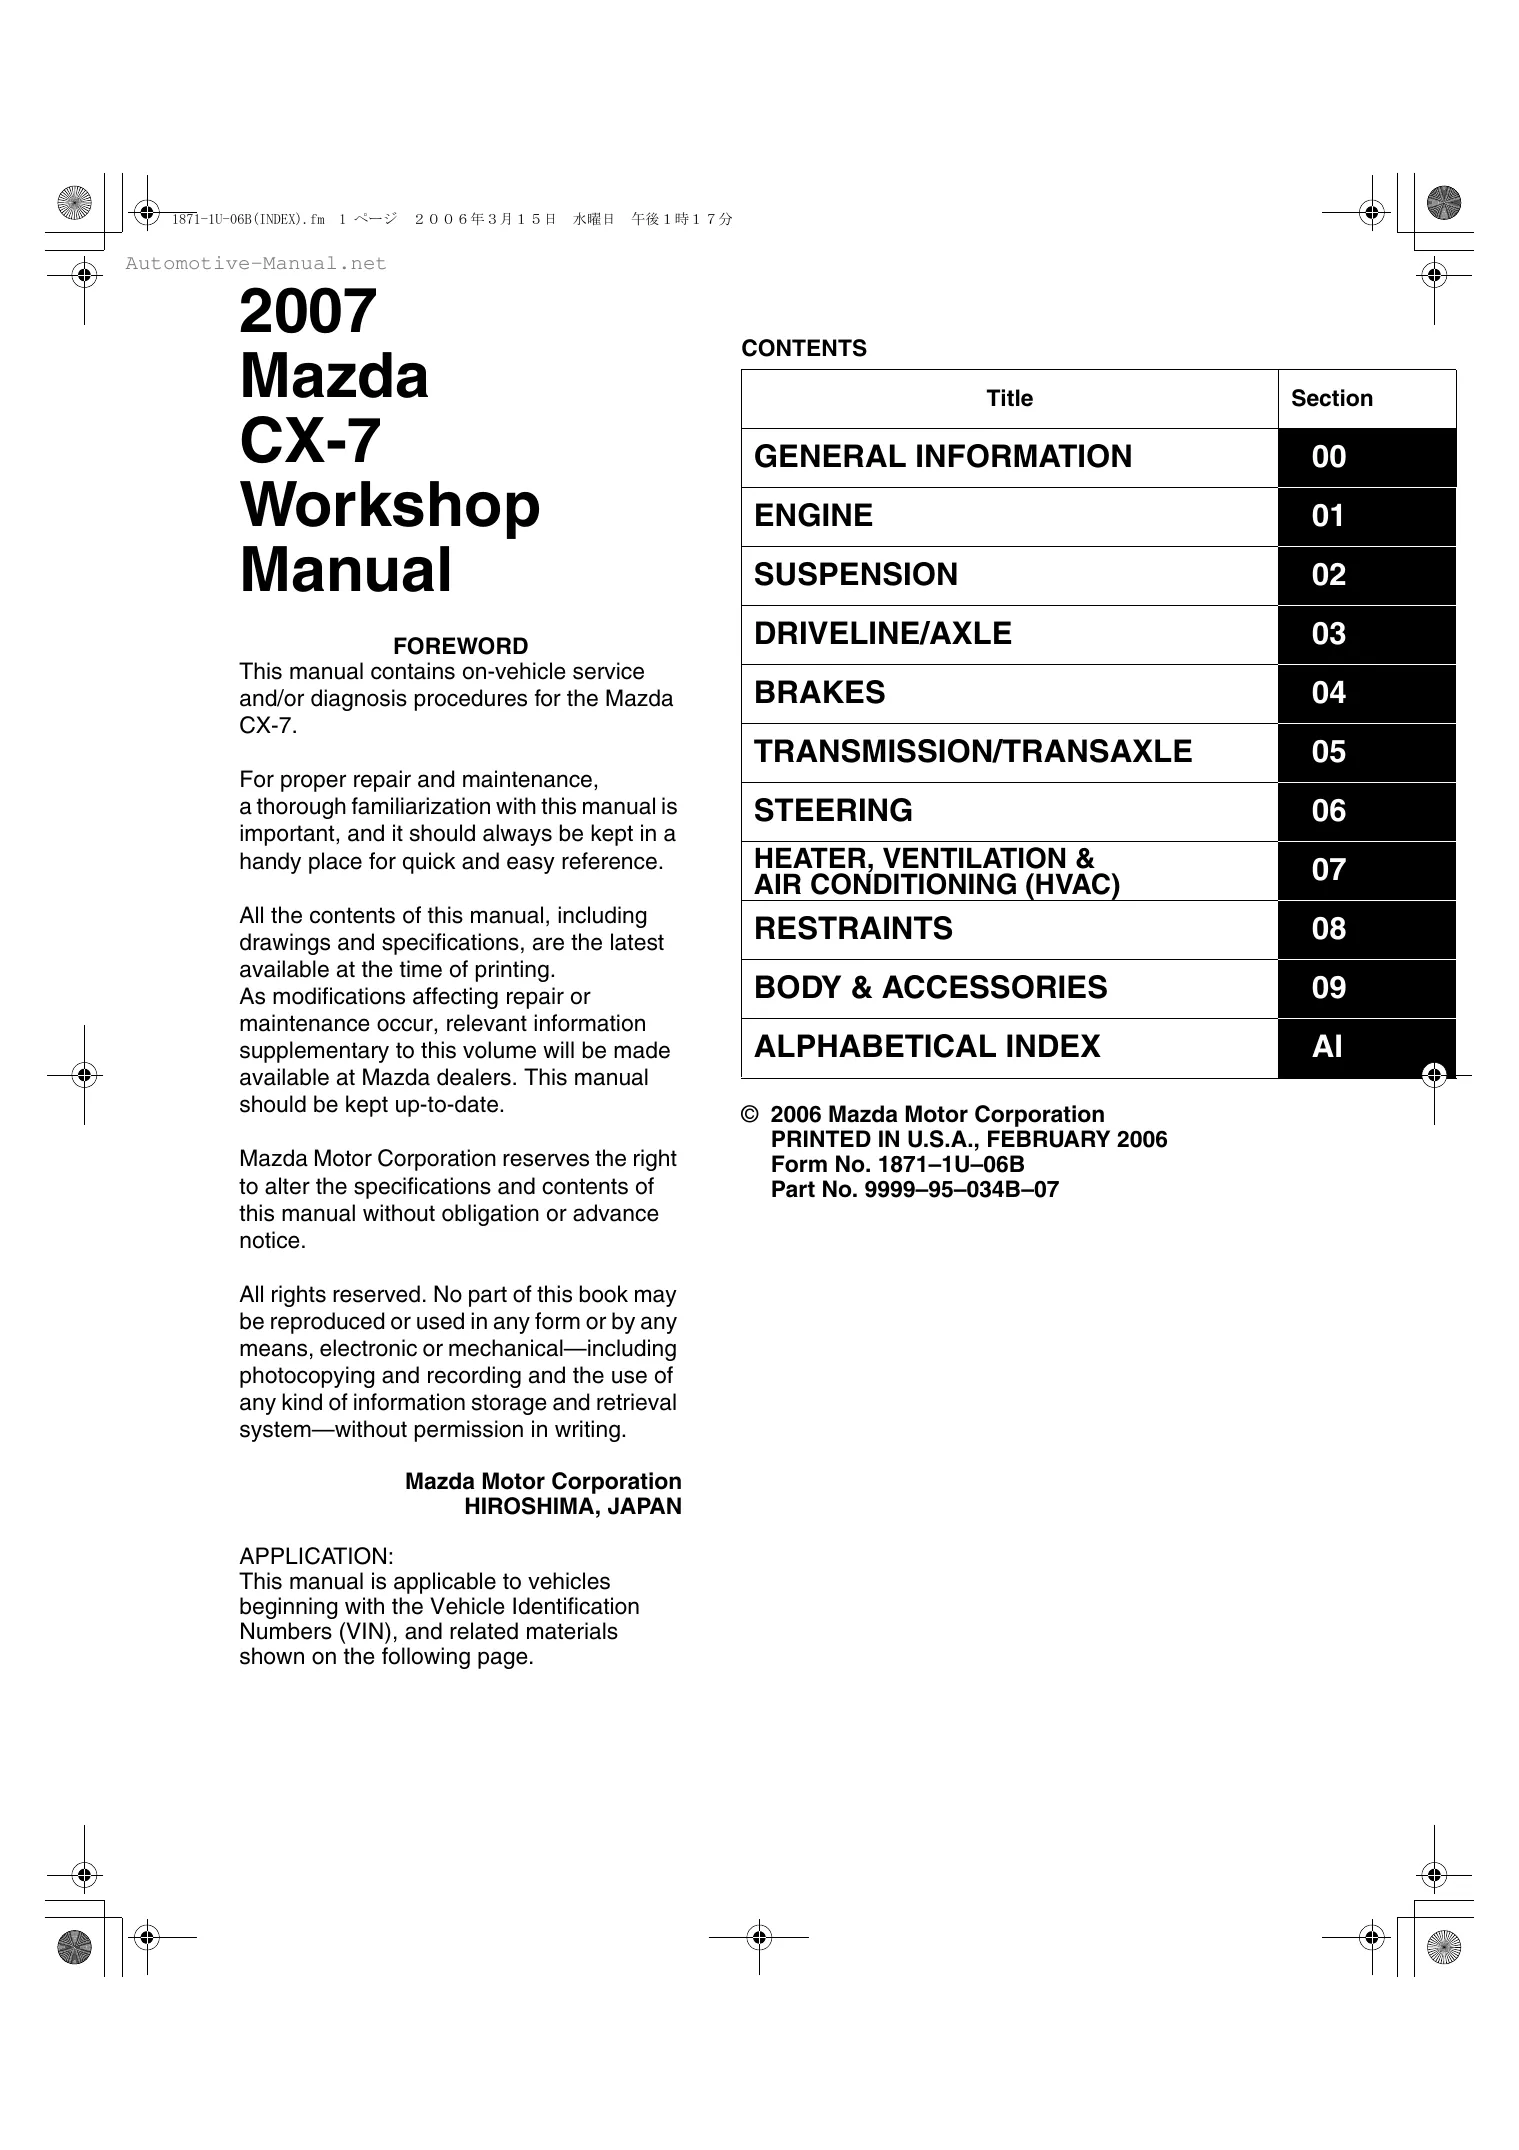 2006-2009 Mazda CX-7 workshop manual